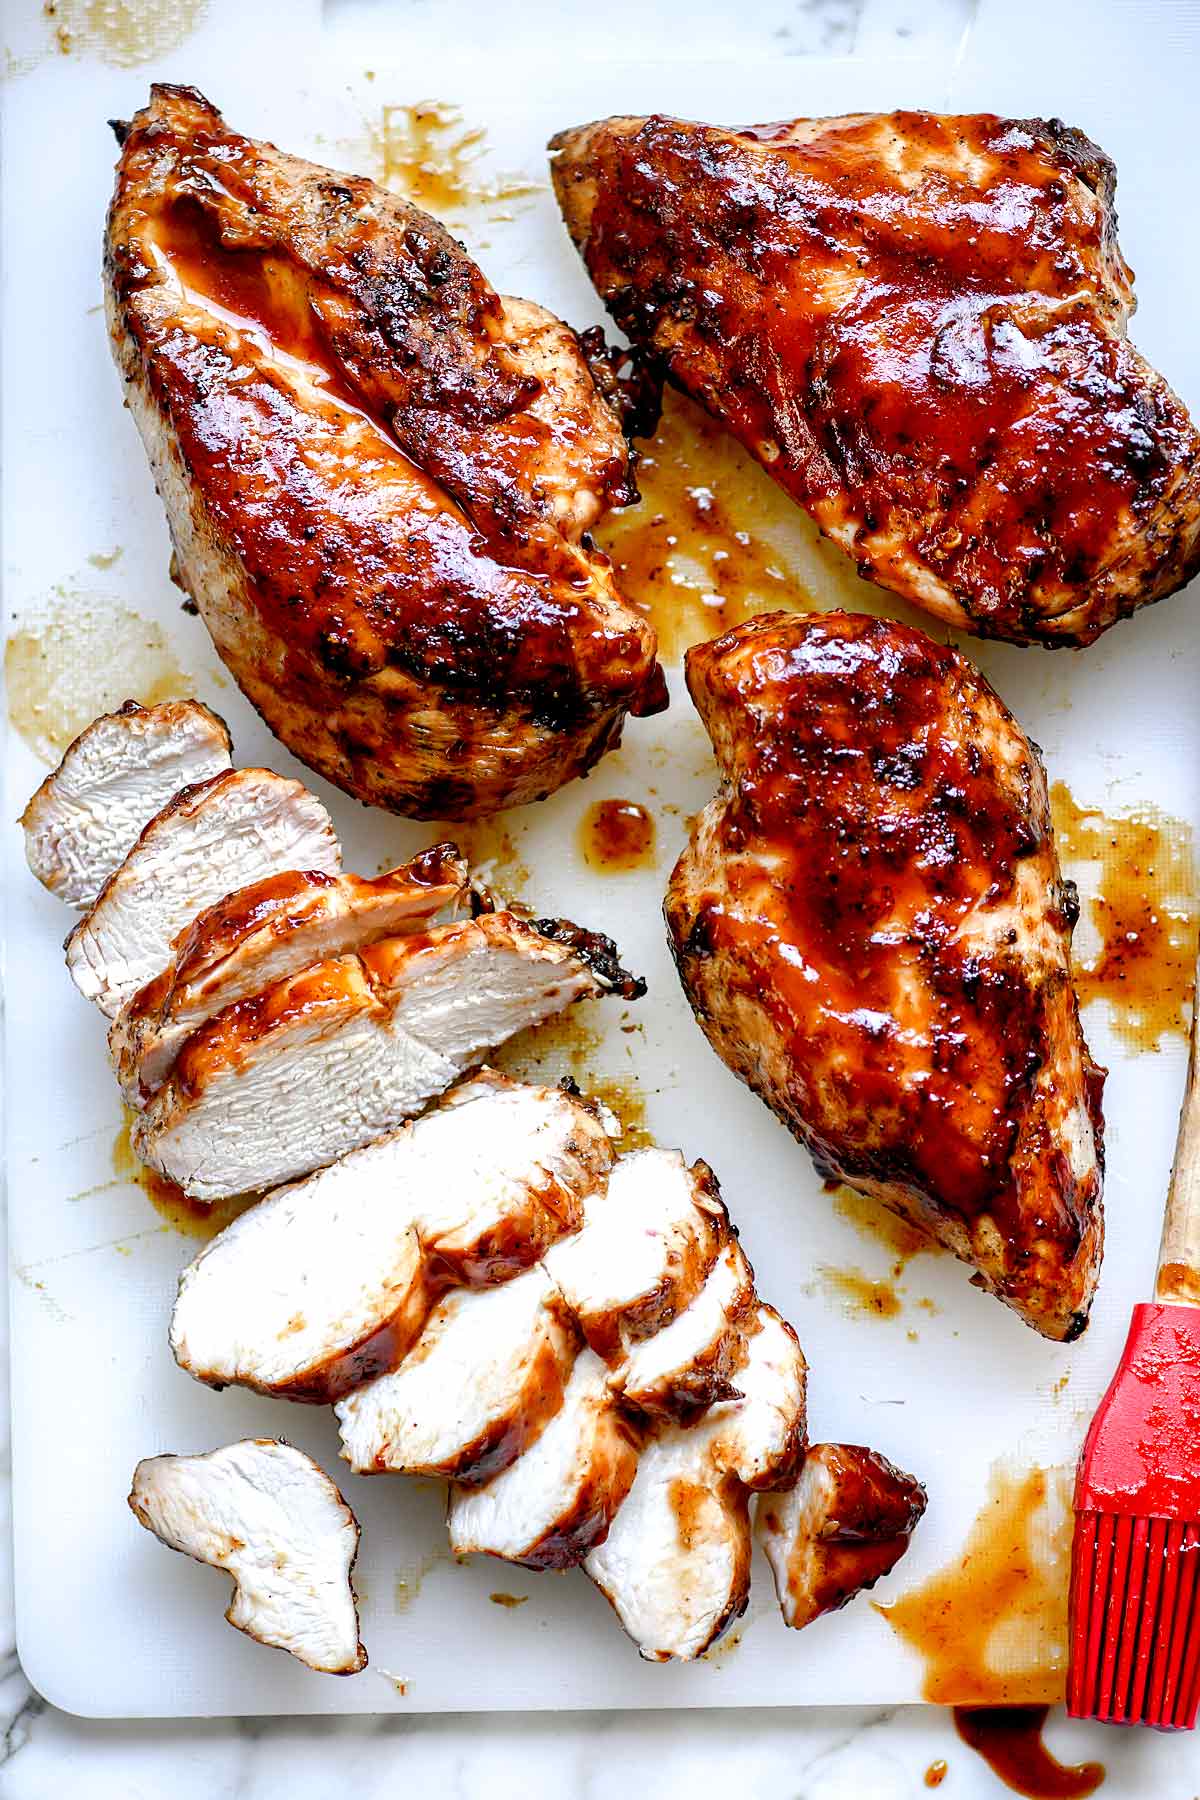 Grilled chicken breast + Juicy